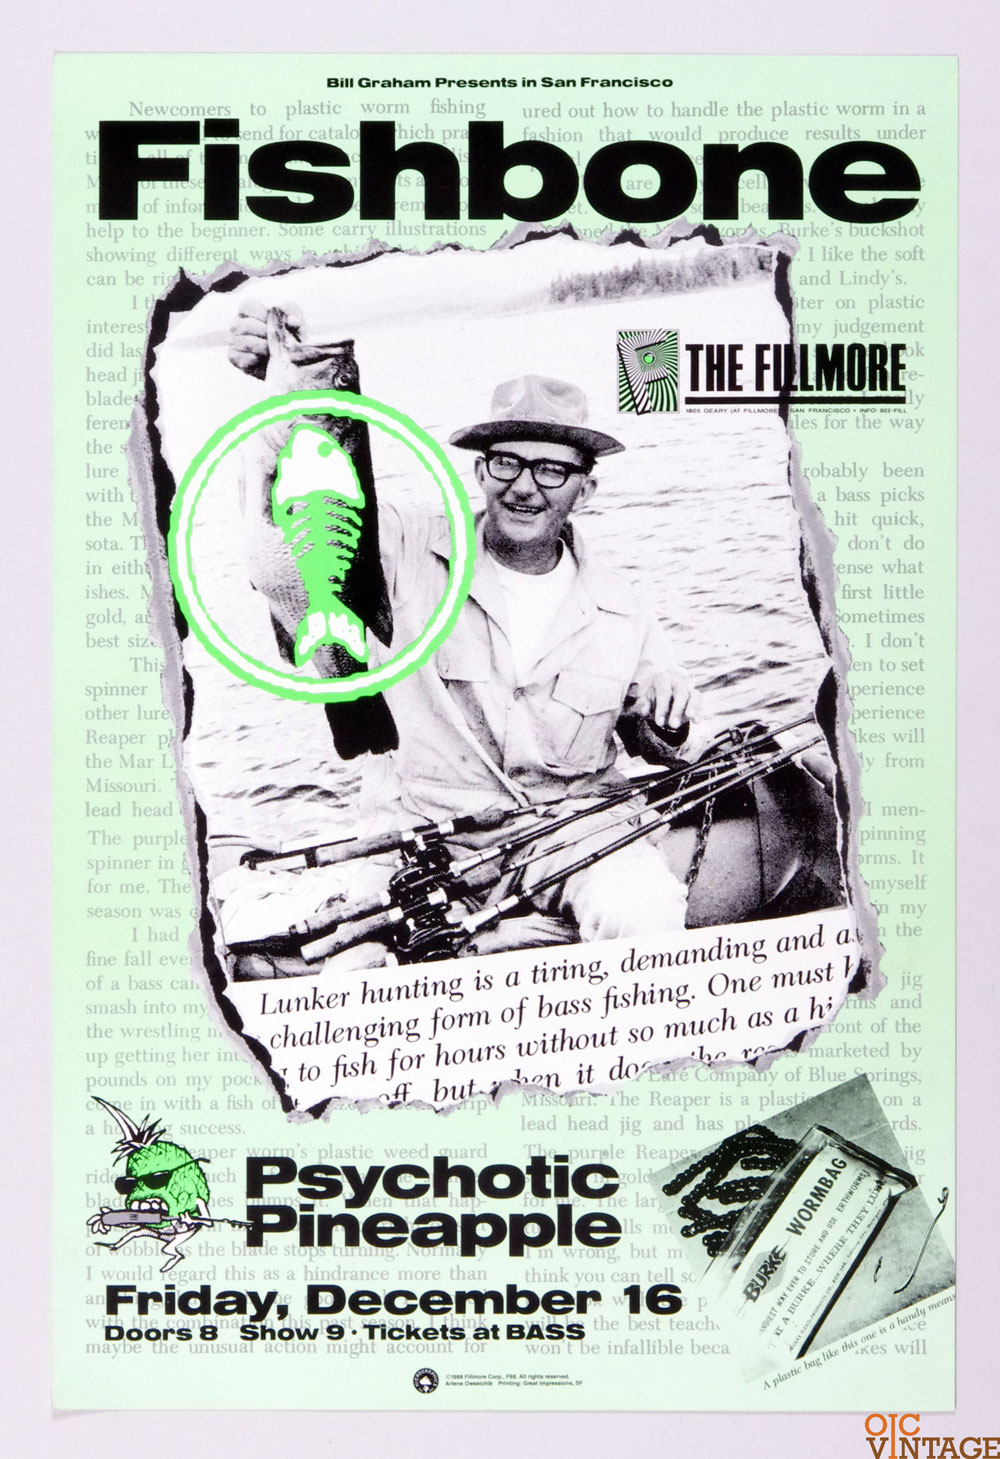 Fishbone Poster w/ Psychotic Pineapple 1988 Dec 16 New Fillmore san Francisco